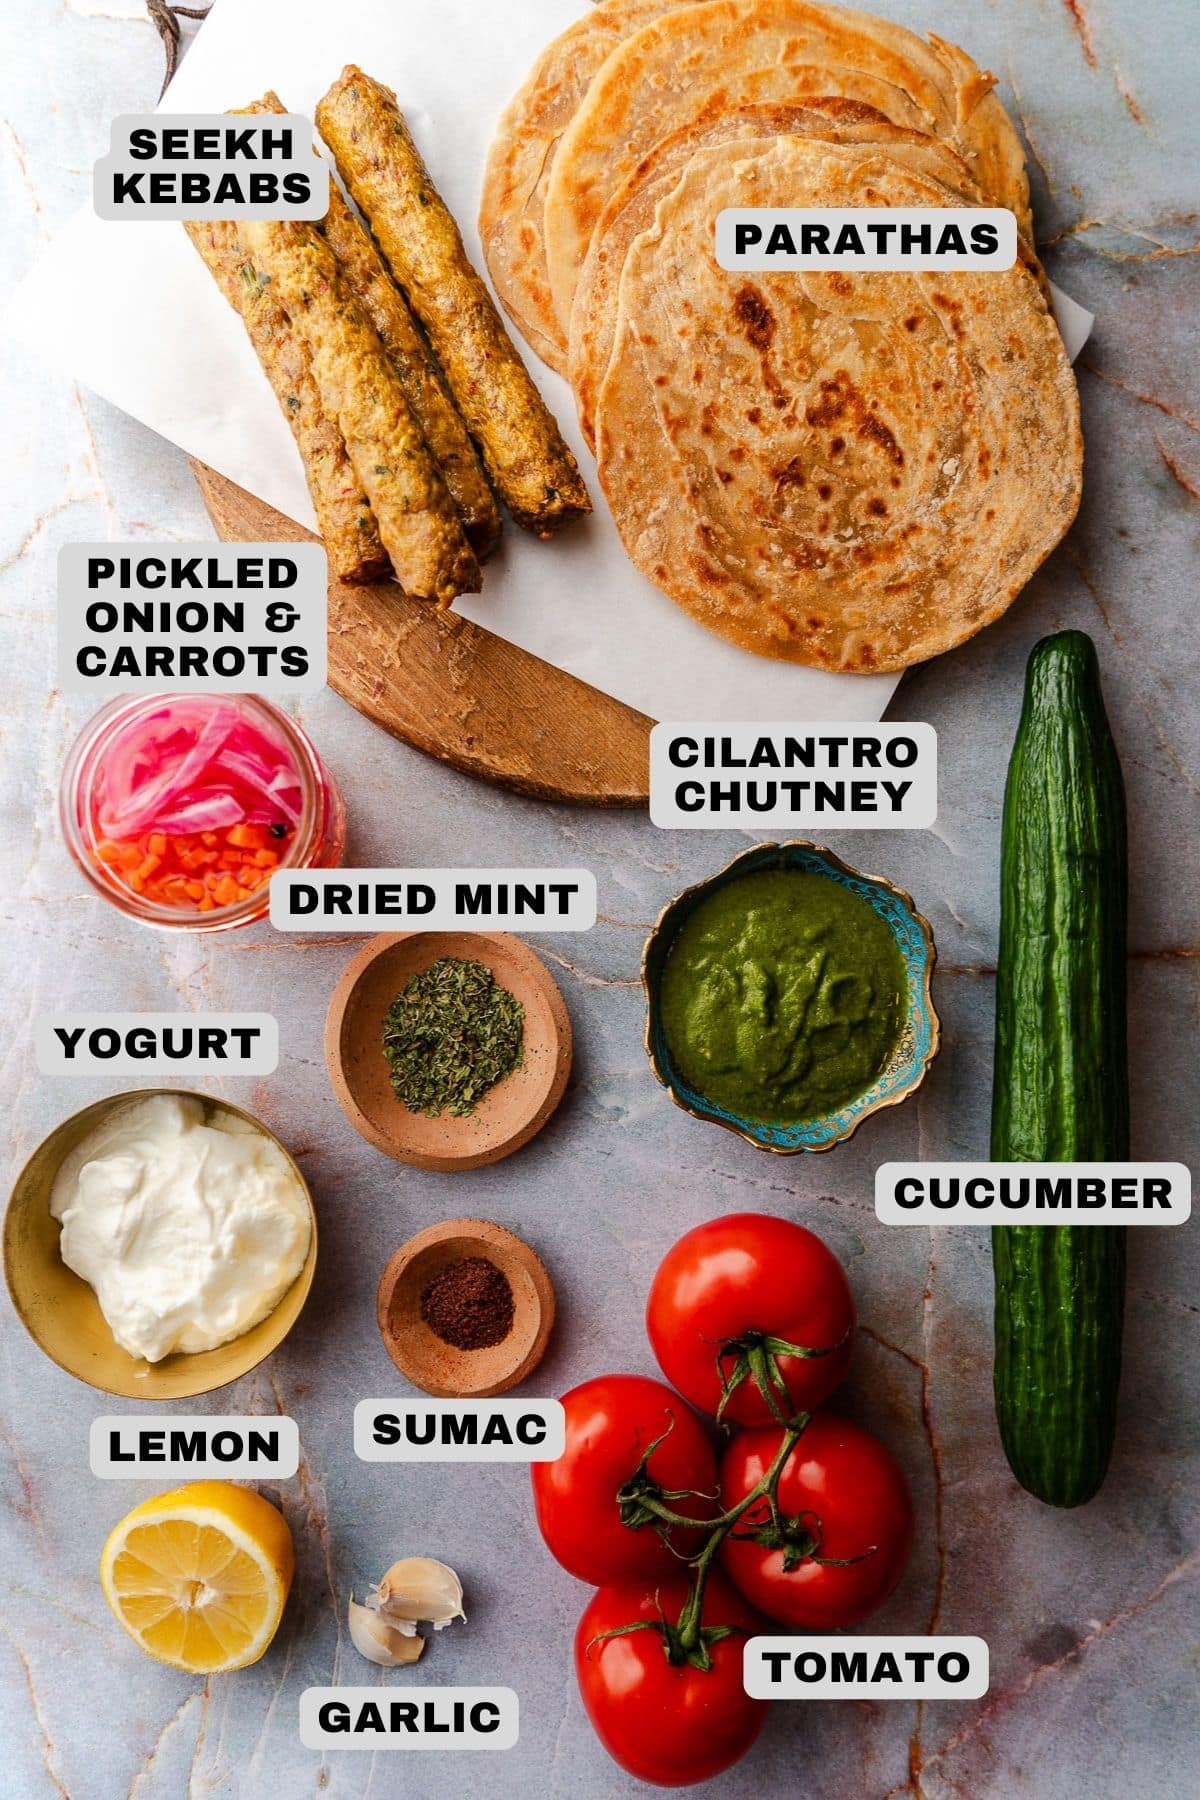 Seekh kebabs, parathas, pickled onion & carrots, dried mint, cilantro chutney, cucumber, tomato, sumac, garlic, lemon, and yogurt ingredients with labels.